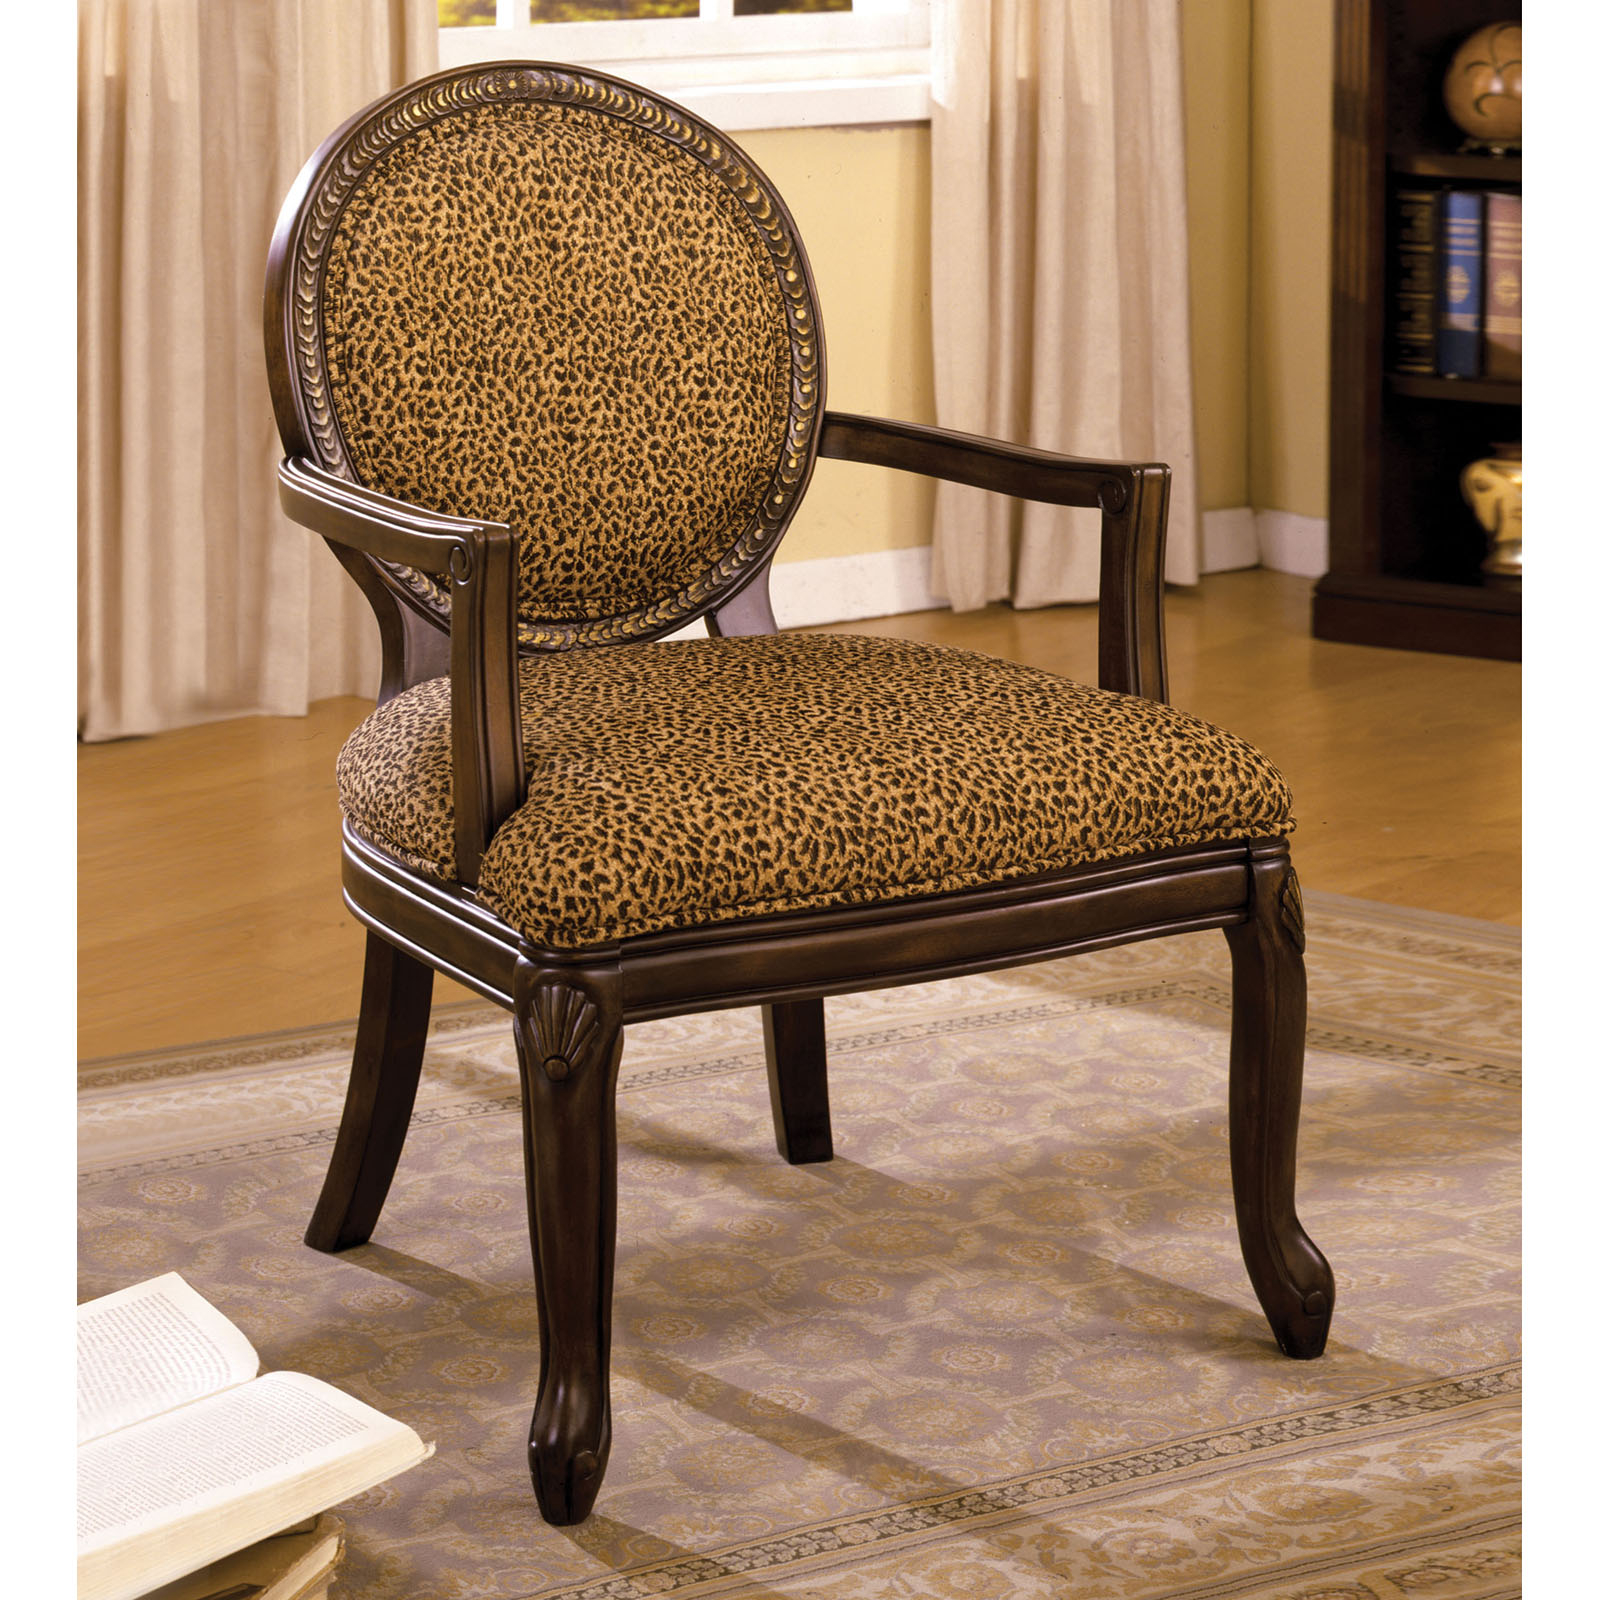 Furniture of america liona leopard print accent chair